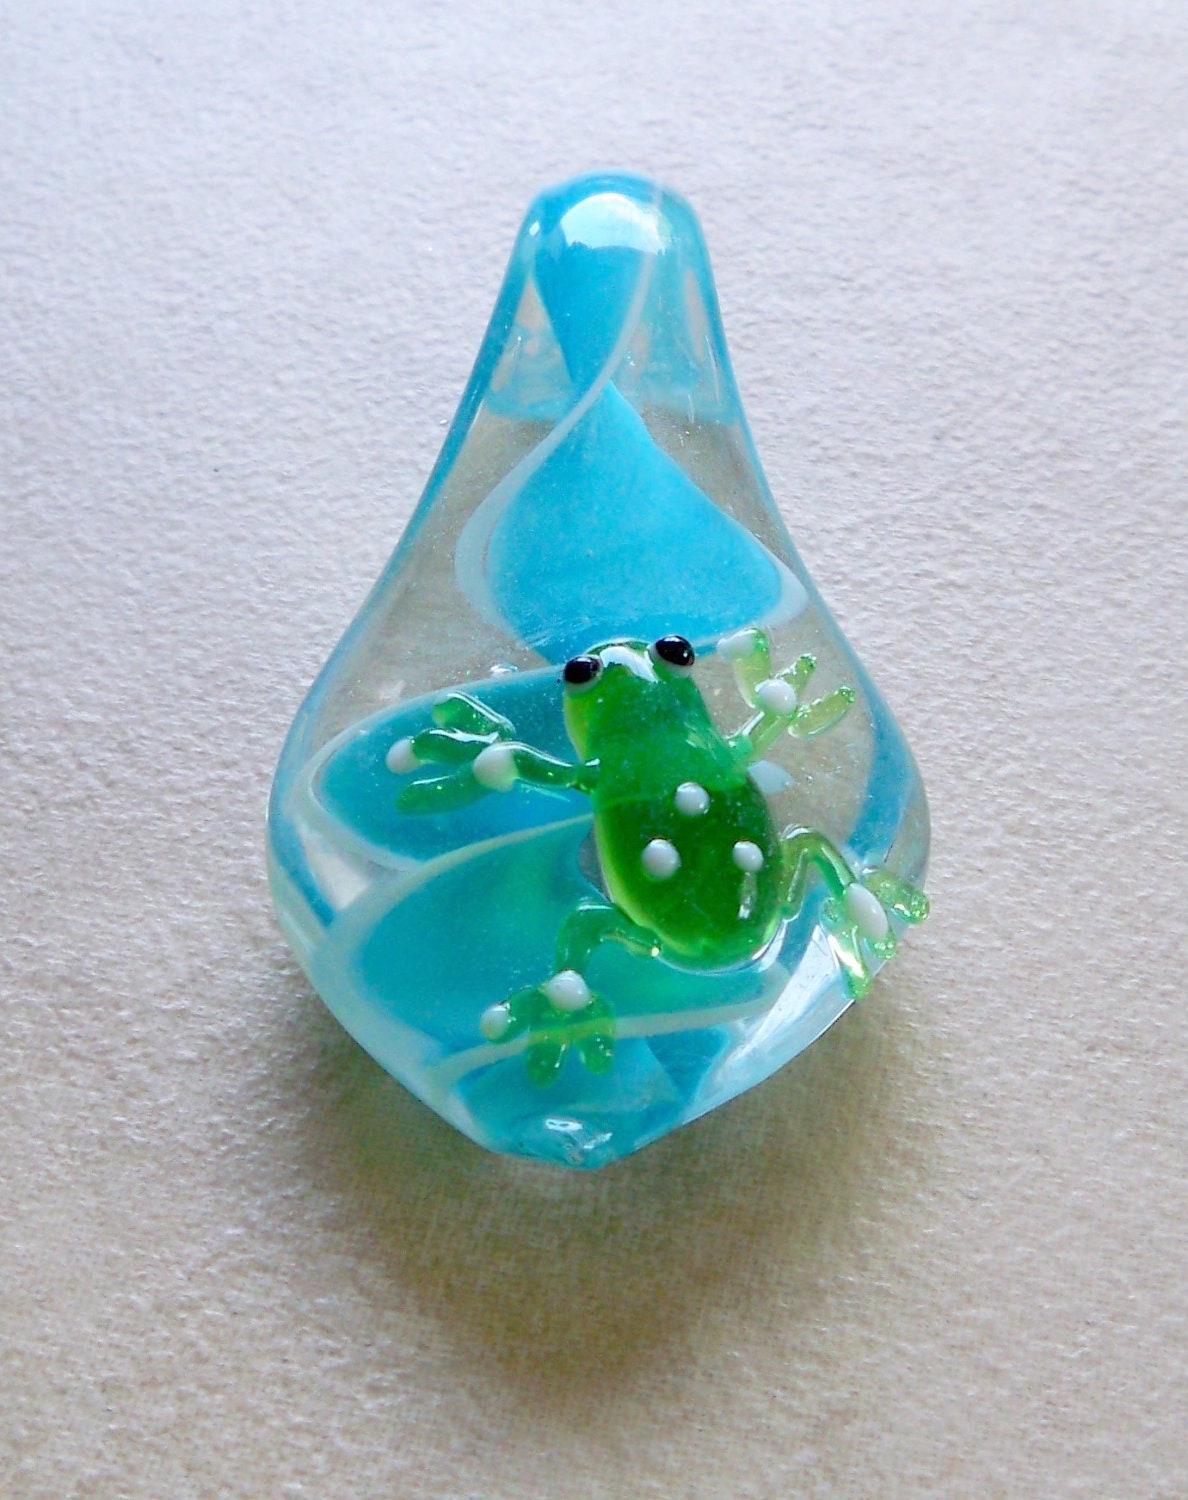 Fun Lampwork pendant with beach frog climbing the turquoise swirl